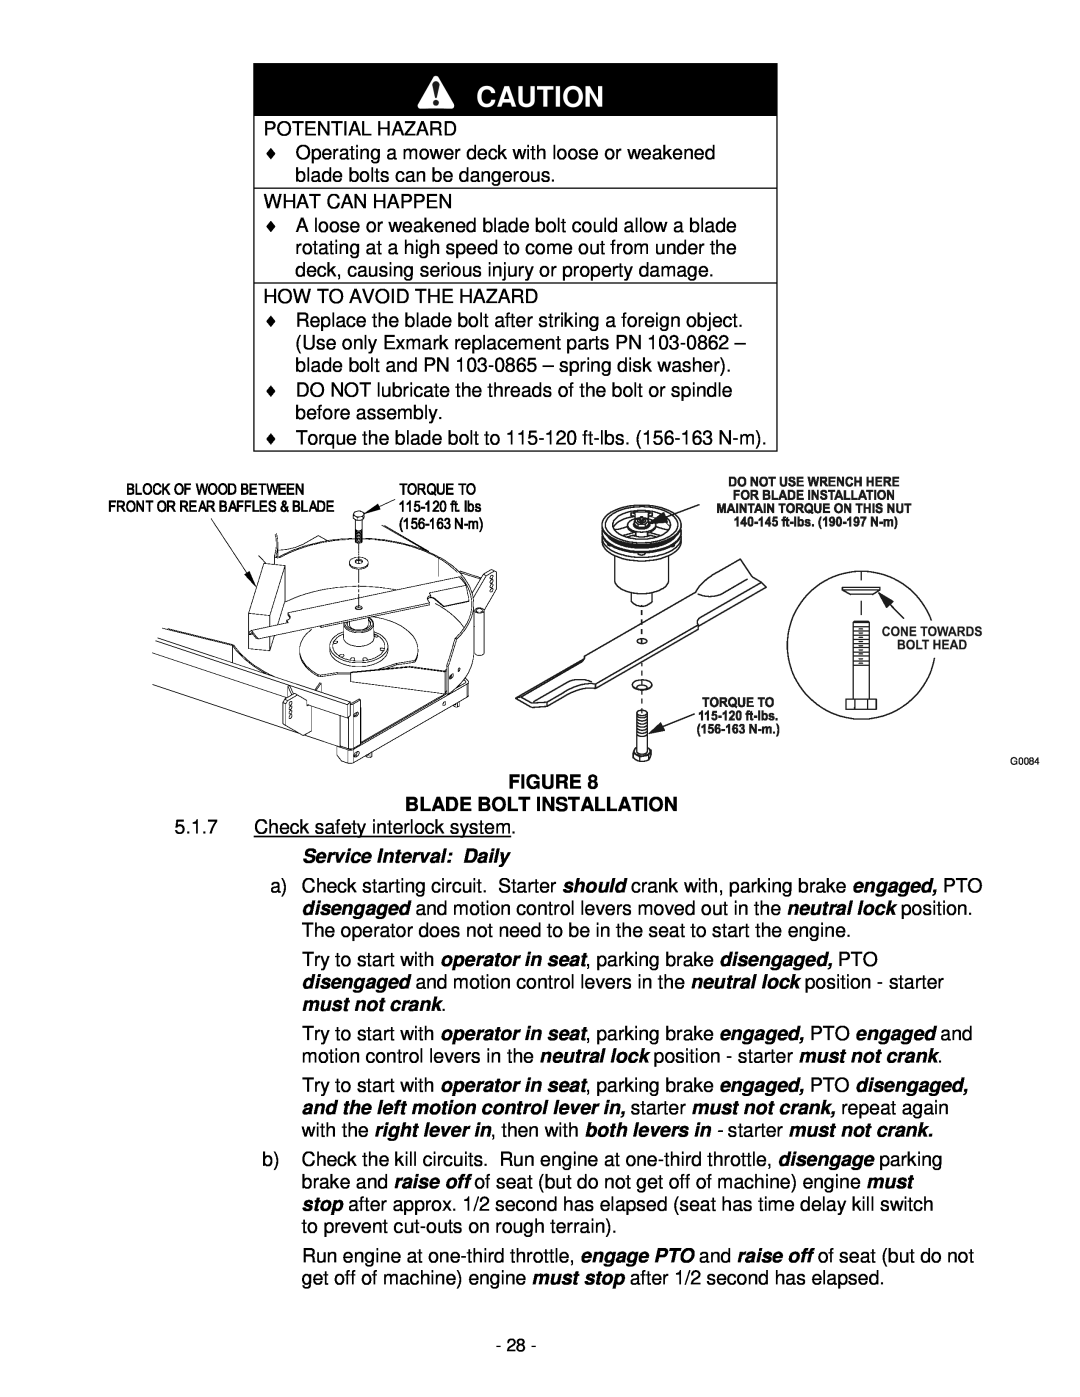 Exmark Lazer Z XP manual Blade Bolt Installation, Service Interval Daily, G0084 